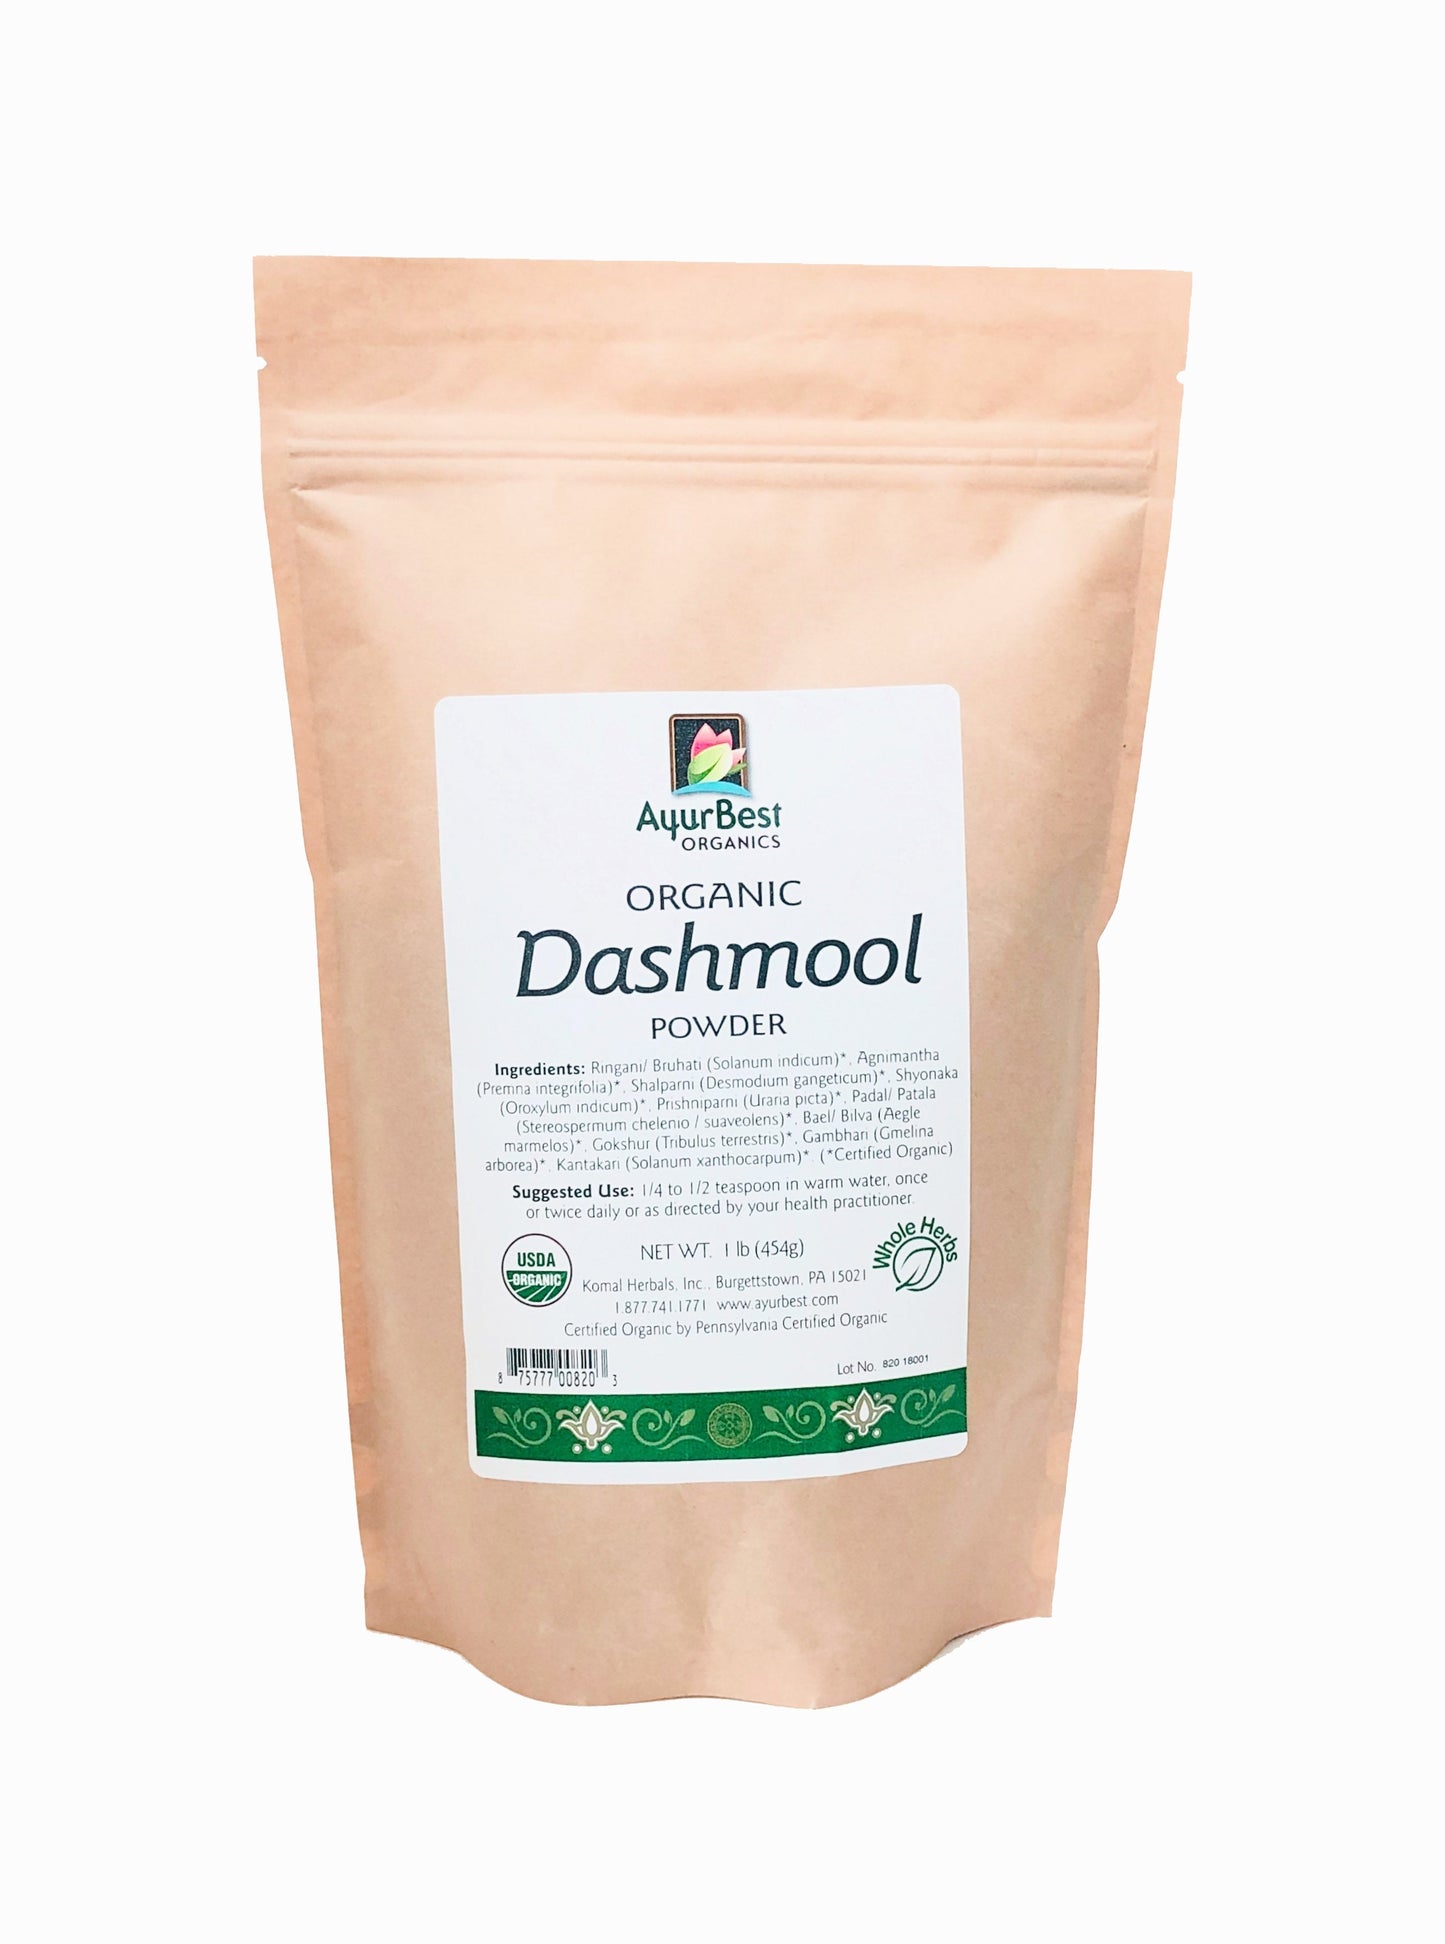 Wholesale Spices & Herbs - Dashmool Powder, Organic 1lb (454g) Bag